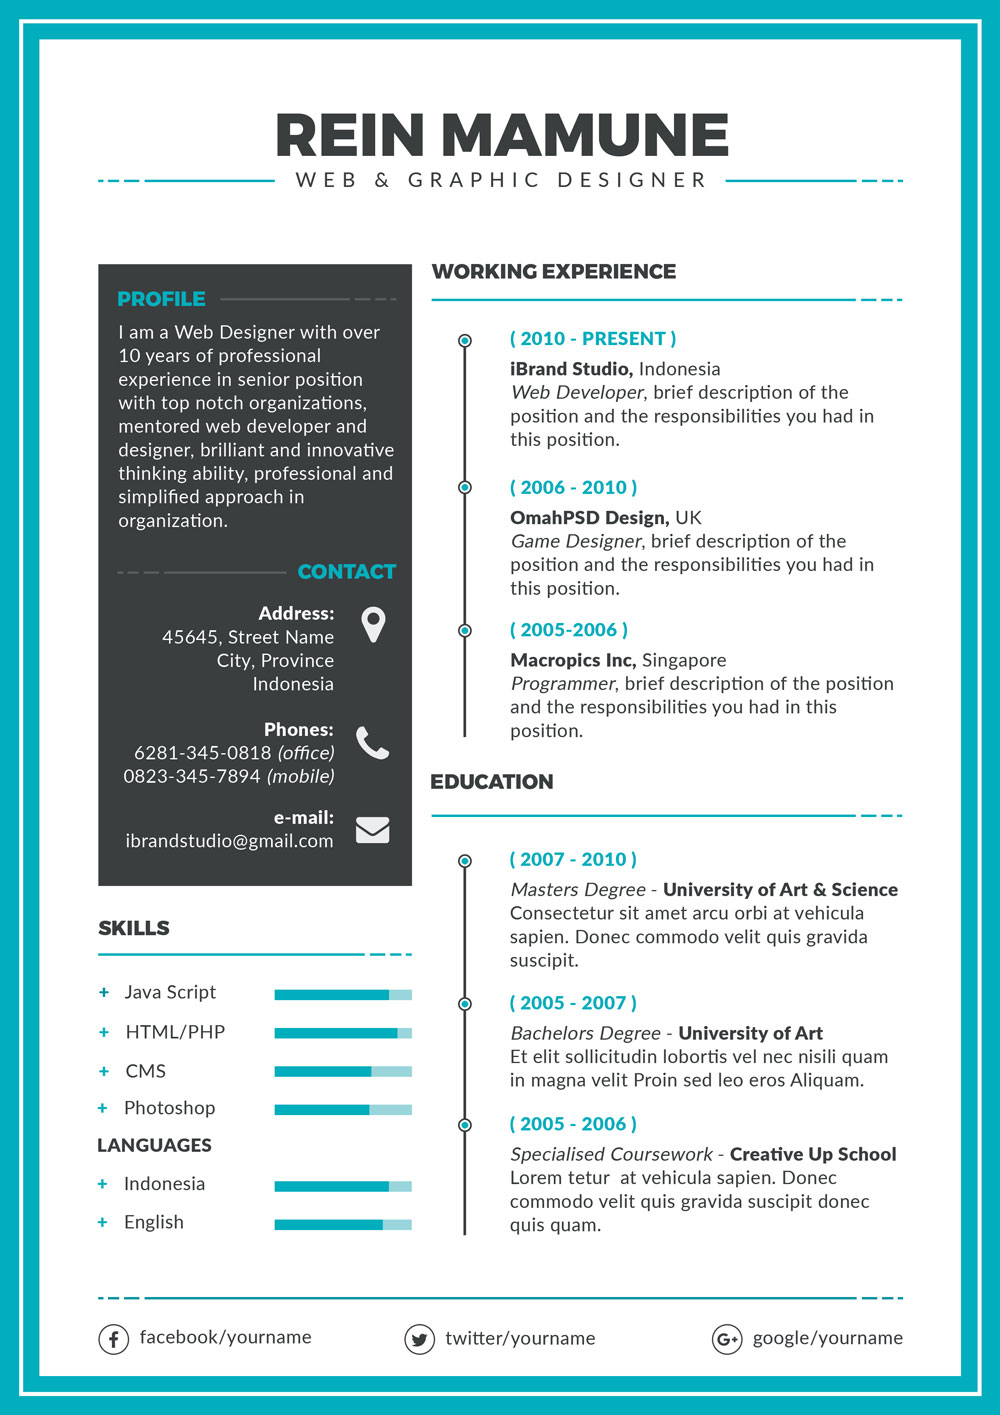 Free-PSD-Resume-Template-Cover Letter & Portfolio Design-For-Web-&-Graphic-Designer (2)